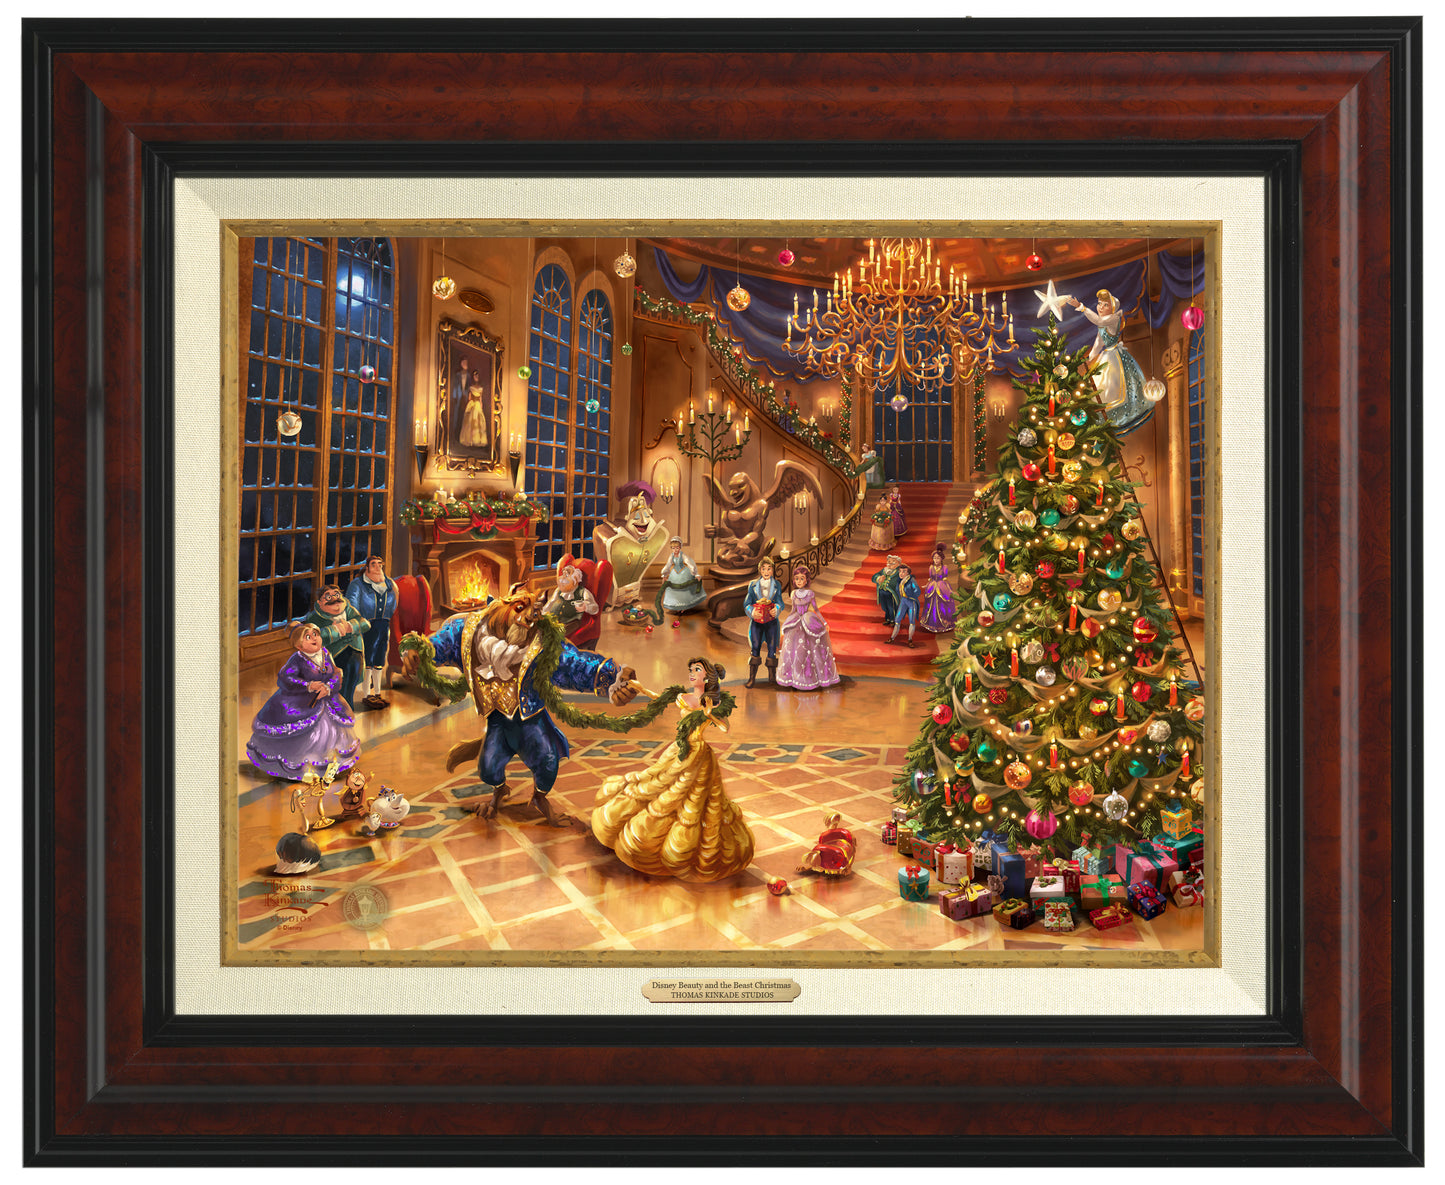 158458_CLF_Disney Beauty and the Beast Christmas Celebration_12x16_Framed_Classic_Burl.jpg